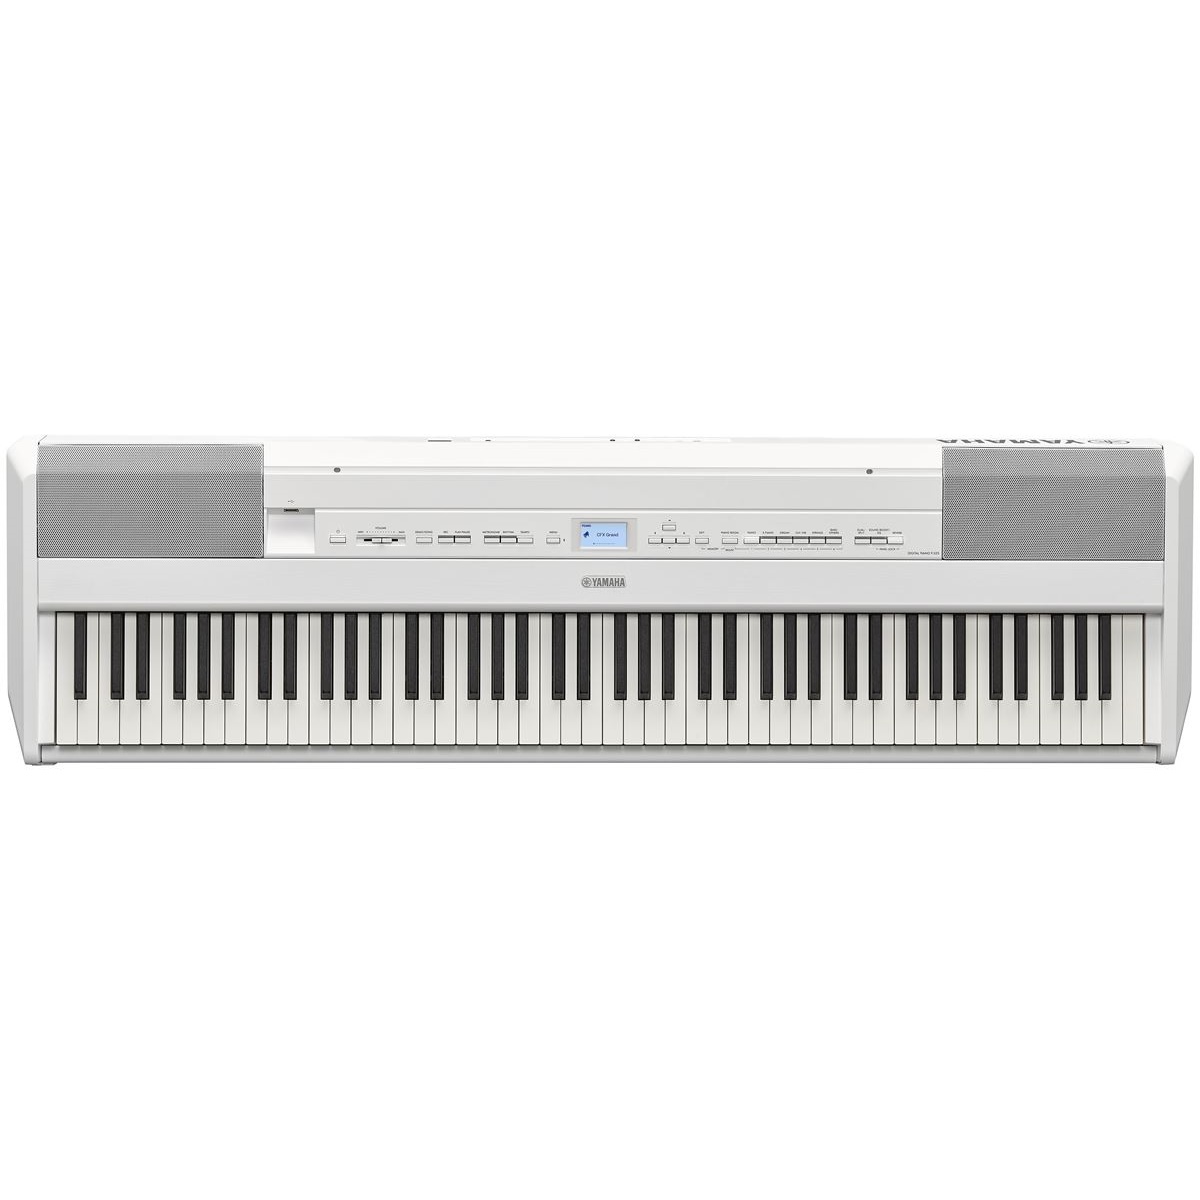 YAMAHA P525 W PIANOFORTE DIGITALE ARRANGER 88 TASTI PESATI BIANCO 2